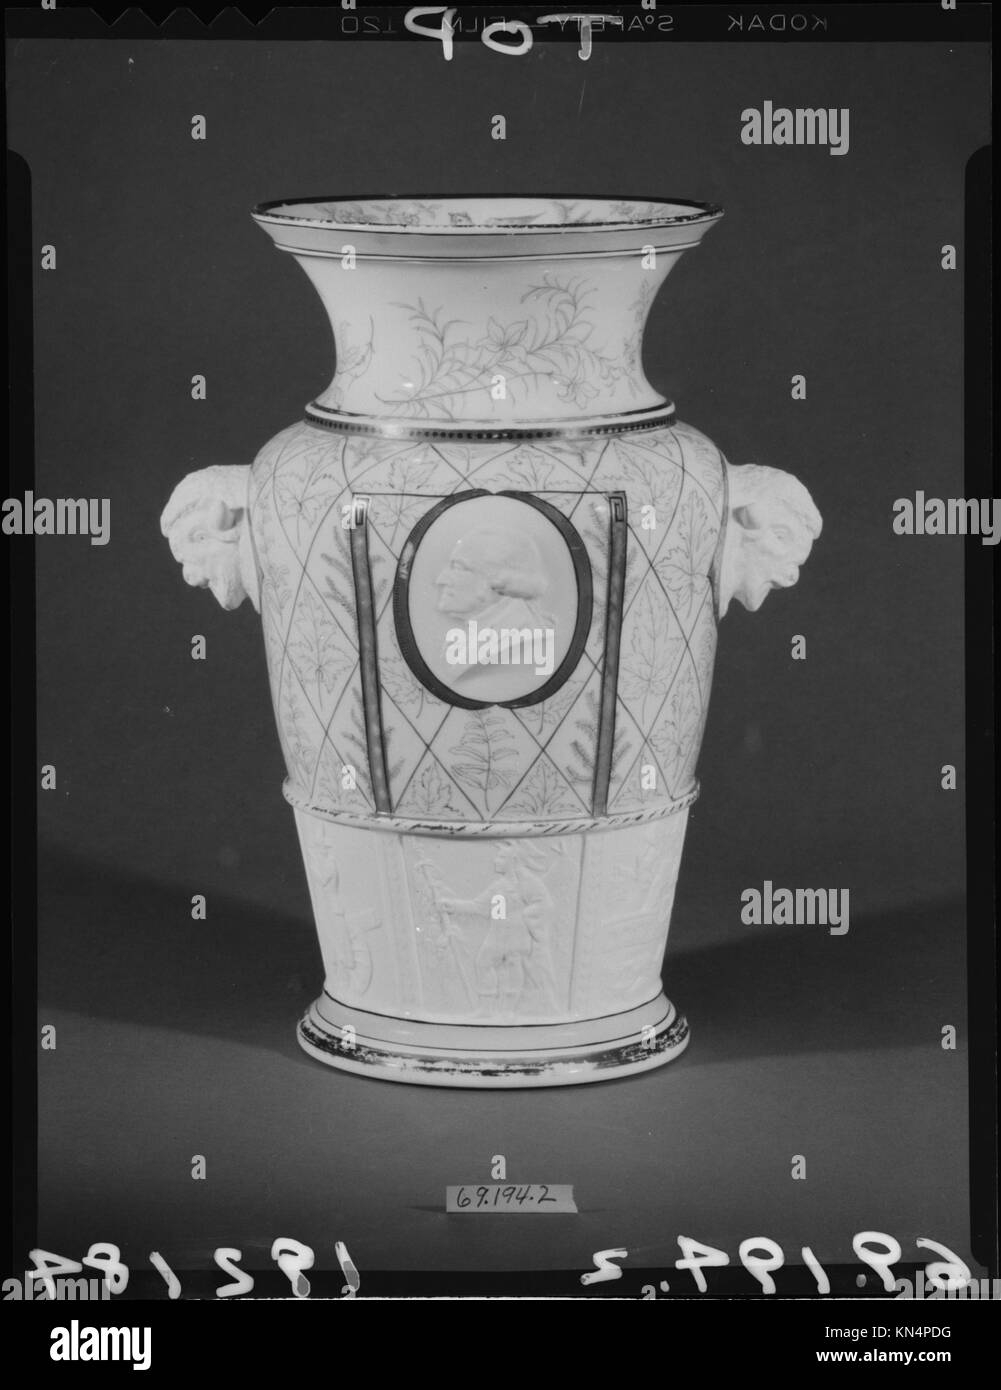 Century Vase MET 192184 1532 Designer: Designed by Karl L. H. M?ller, ca. 1820?1887, Manufacturer: Manufactured by Union Porcelain Works, 1863?ca. 1922, Century Vase, ca. 1876, Porcelain, H. 12 3/4 in. (32.4 cm). The Metropolitan Museum of Art, New York. Gift of Mr. and Mrs. Franklin Chace, 1969 (69.194.2) Stock Photo